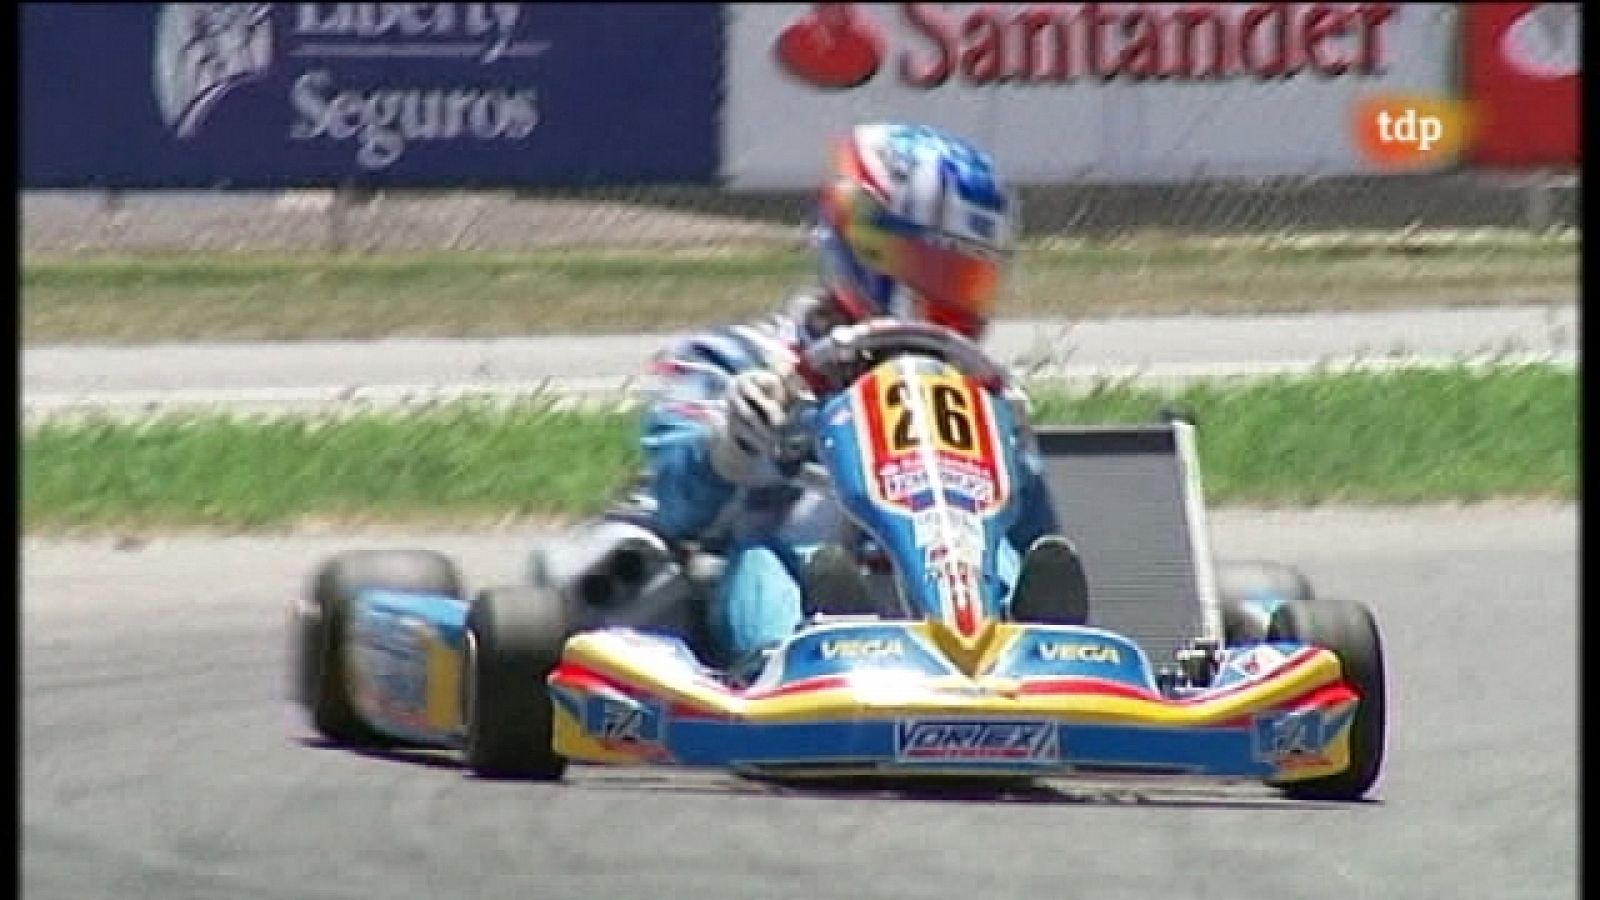 Karting - Campeonato de España, 3ª prueba. Campillos (Málaga) - 30/07/11